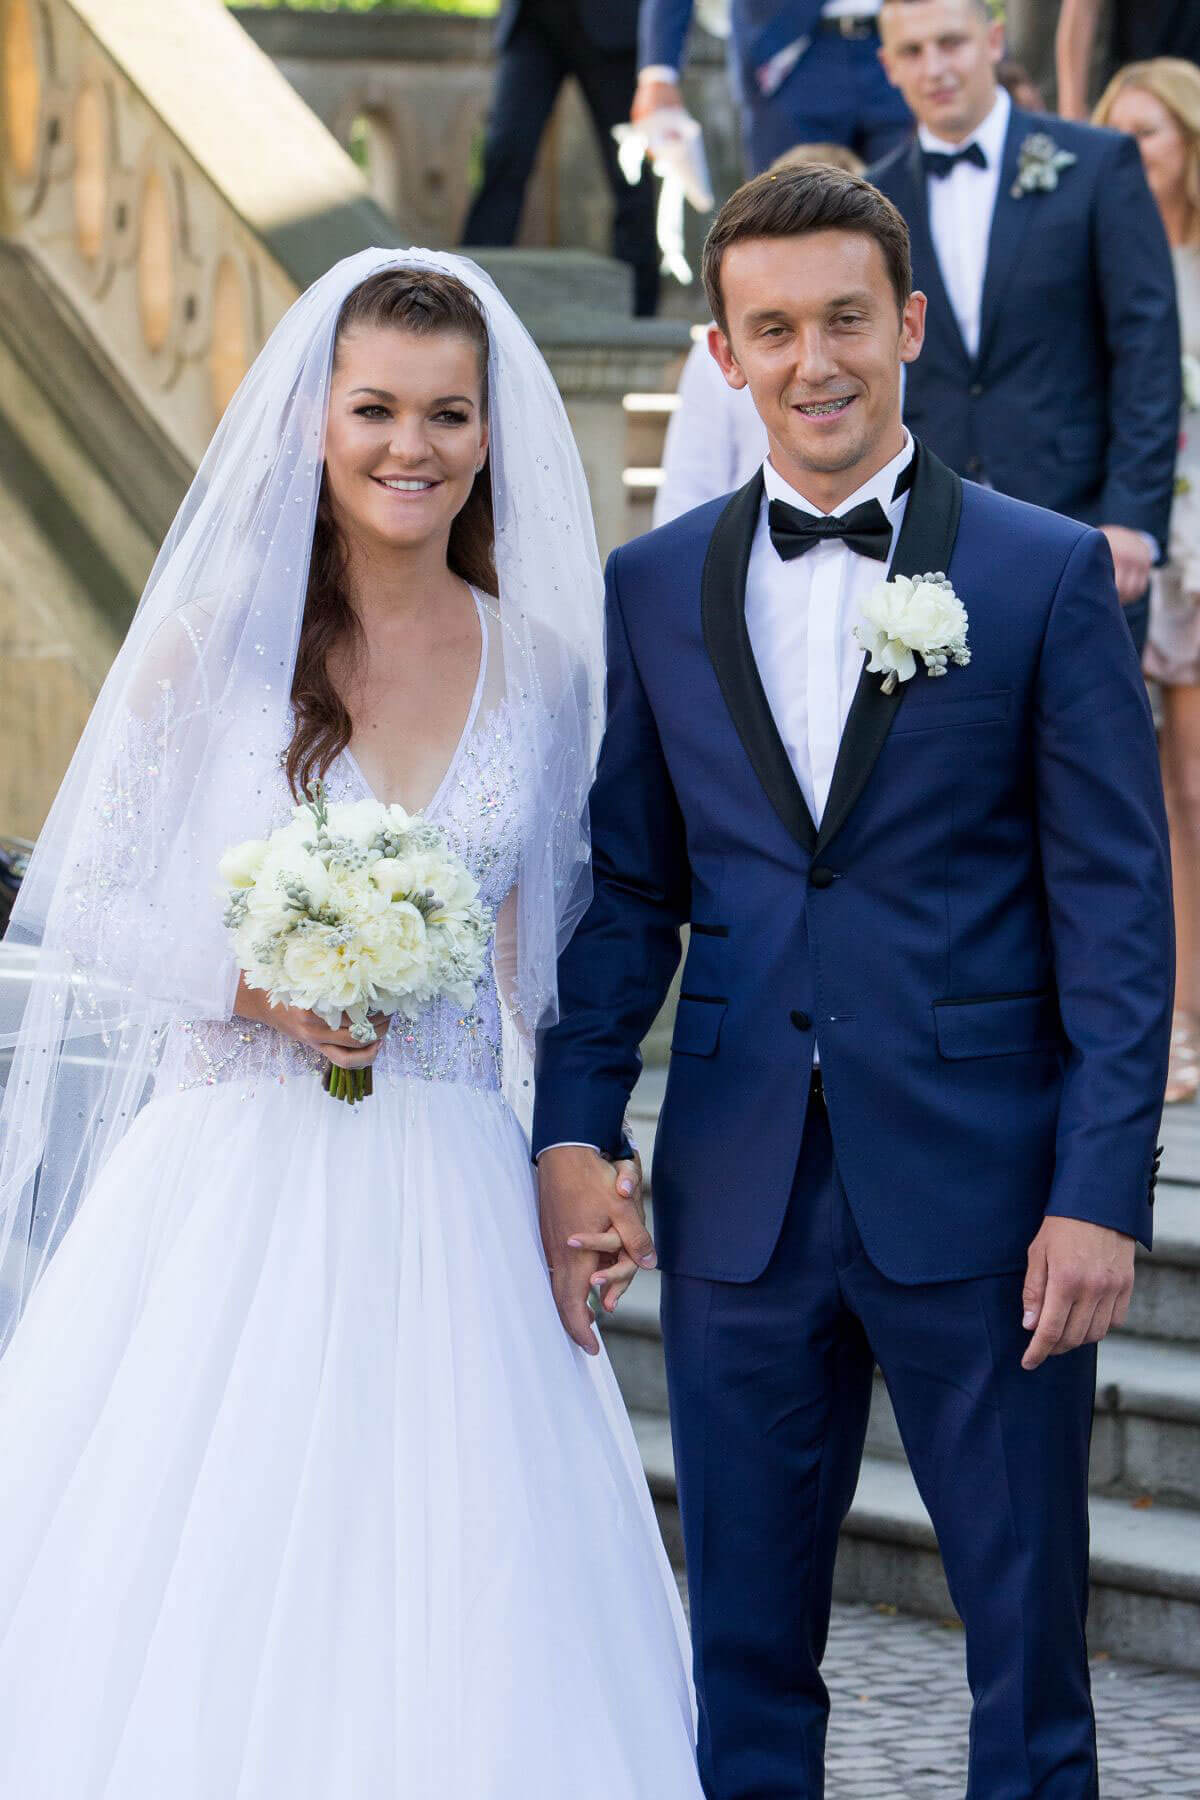 Agnieszka Radwanska Marries Dawid Celt in Cracow Photos